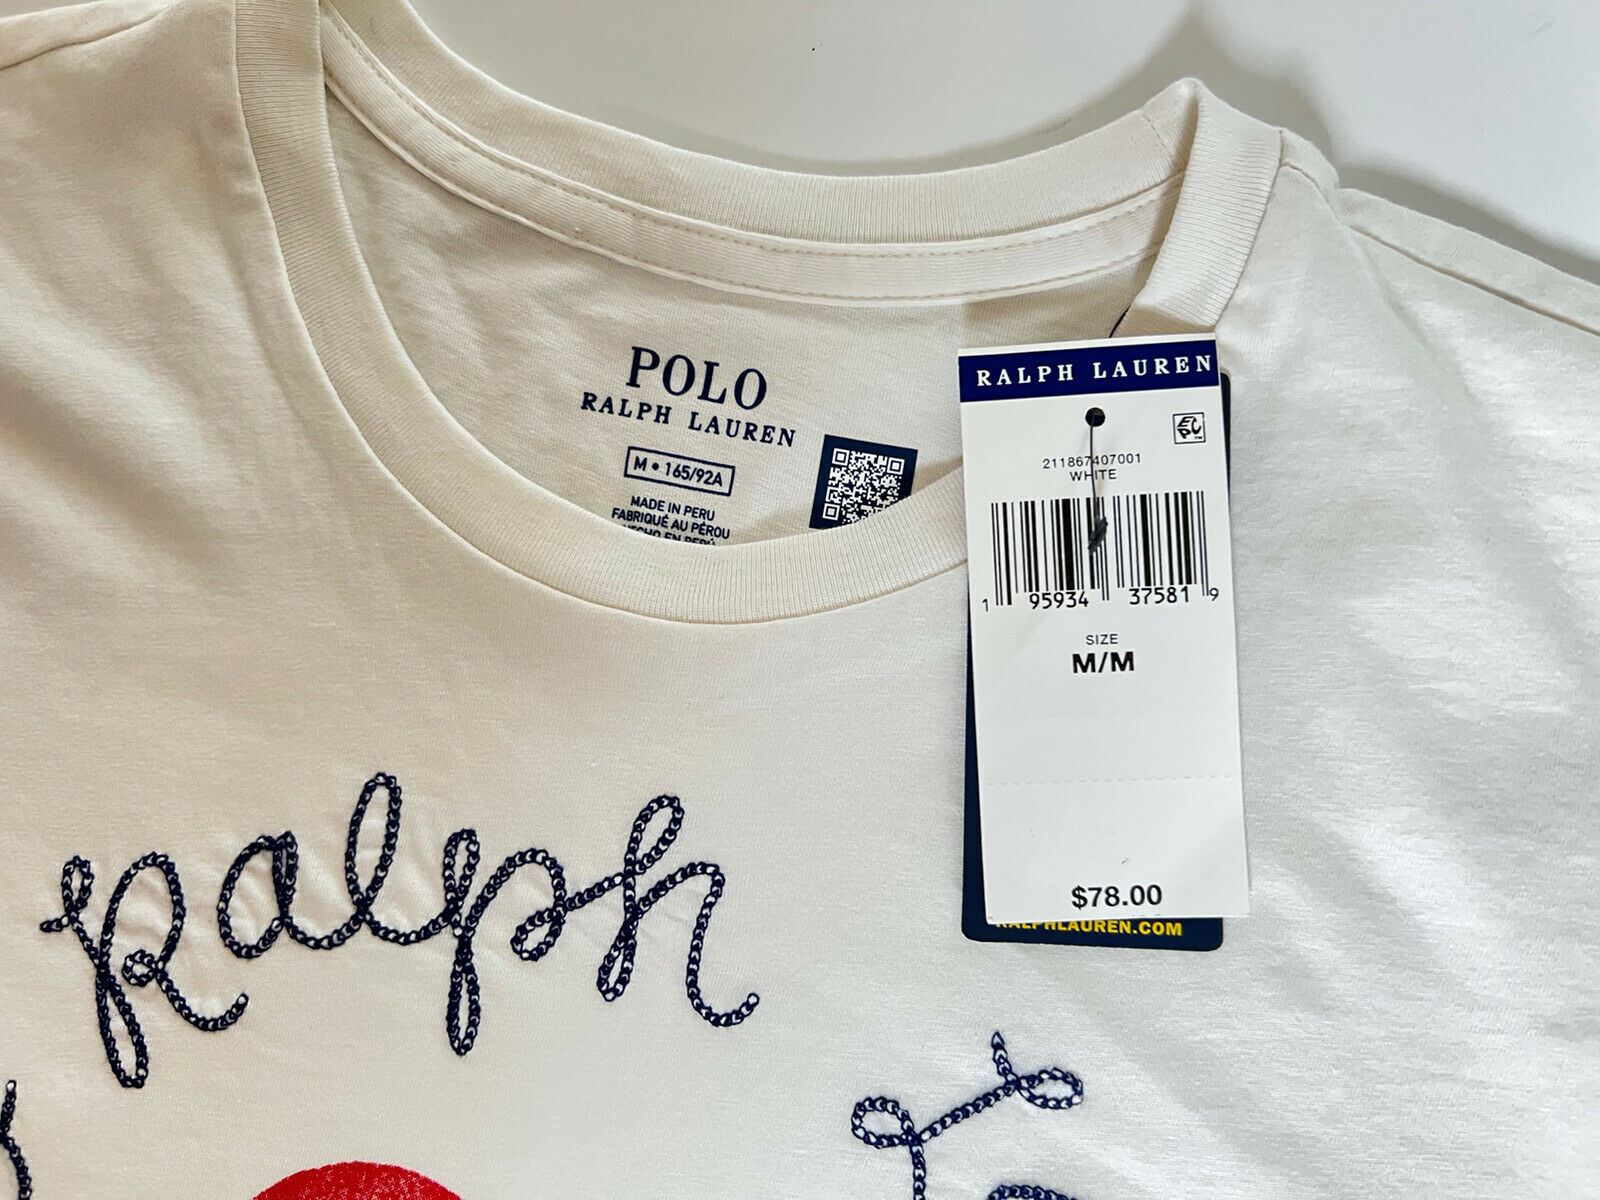 NWT $78 Polo Ralph Lauren Heart Women's T-Shirt White Medium